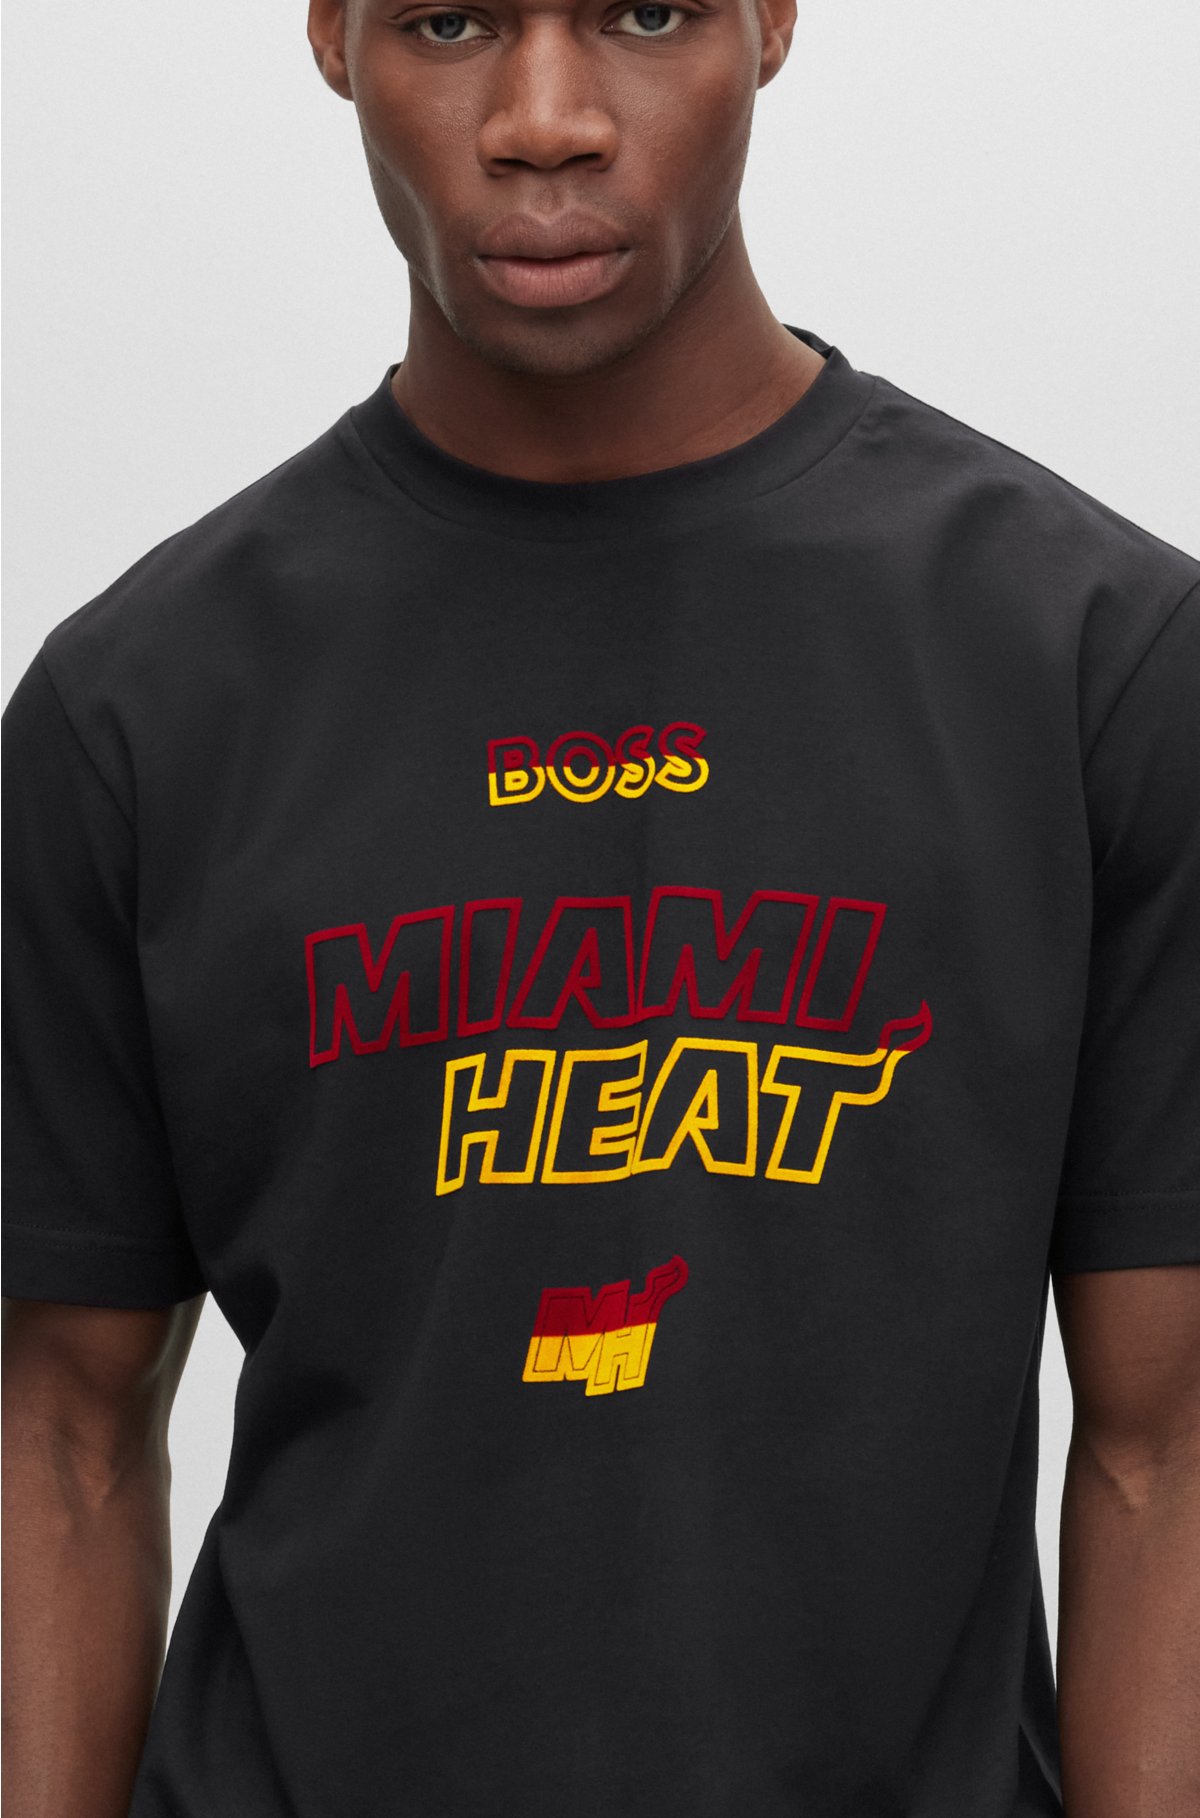 Official Miami Heat Polos, Polo Shirts, Golf Shirts